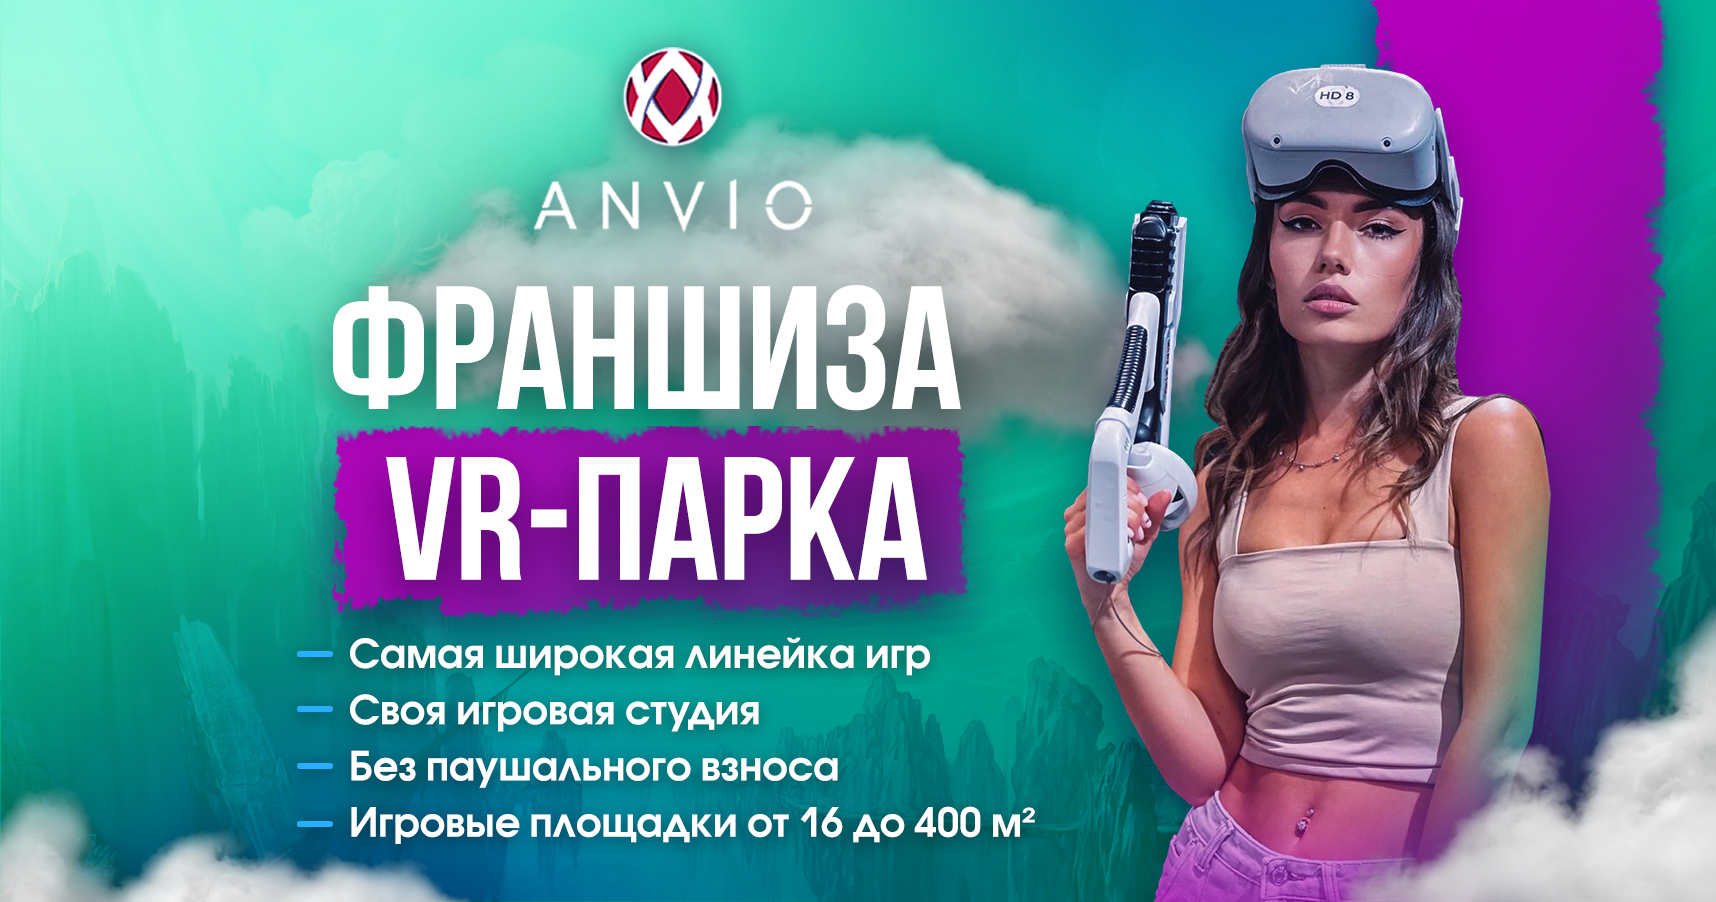 ANVIO — франшиза парка виртуальной реальности